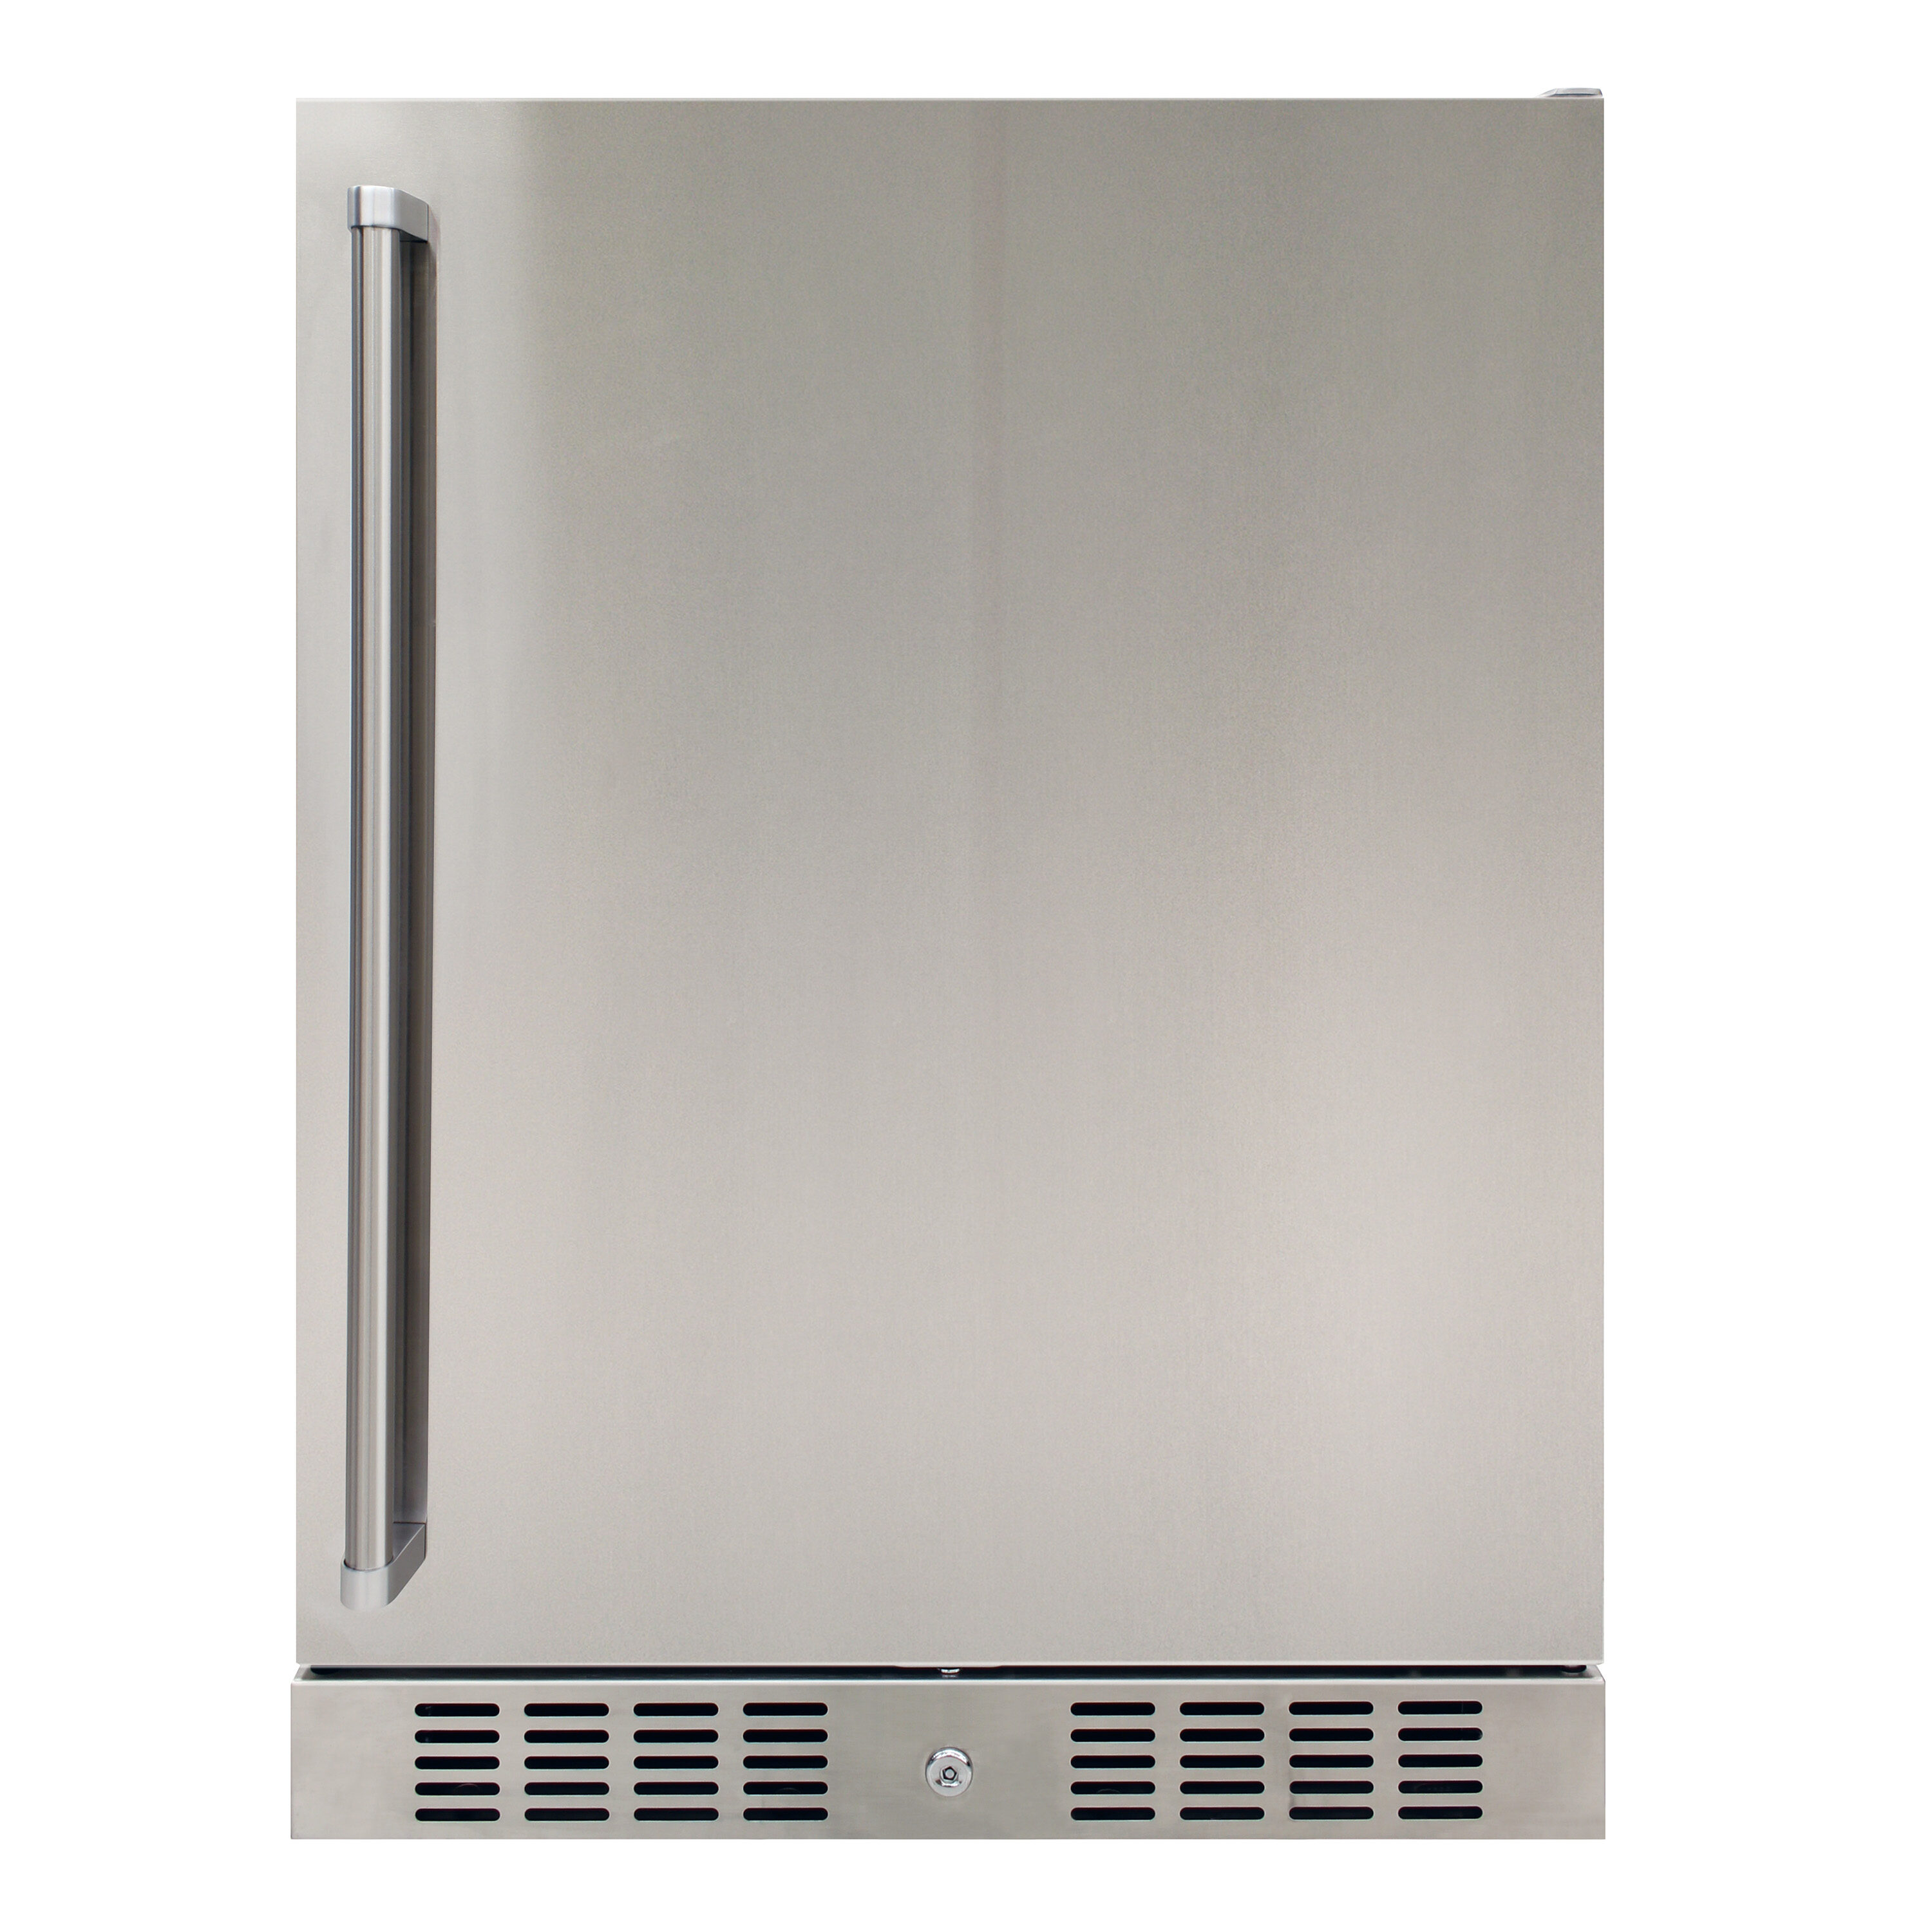 Refrigerator Lock Available @ Best Price Online